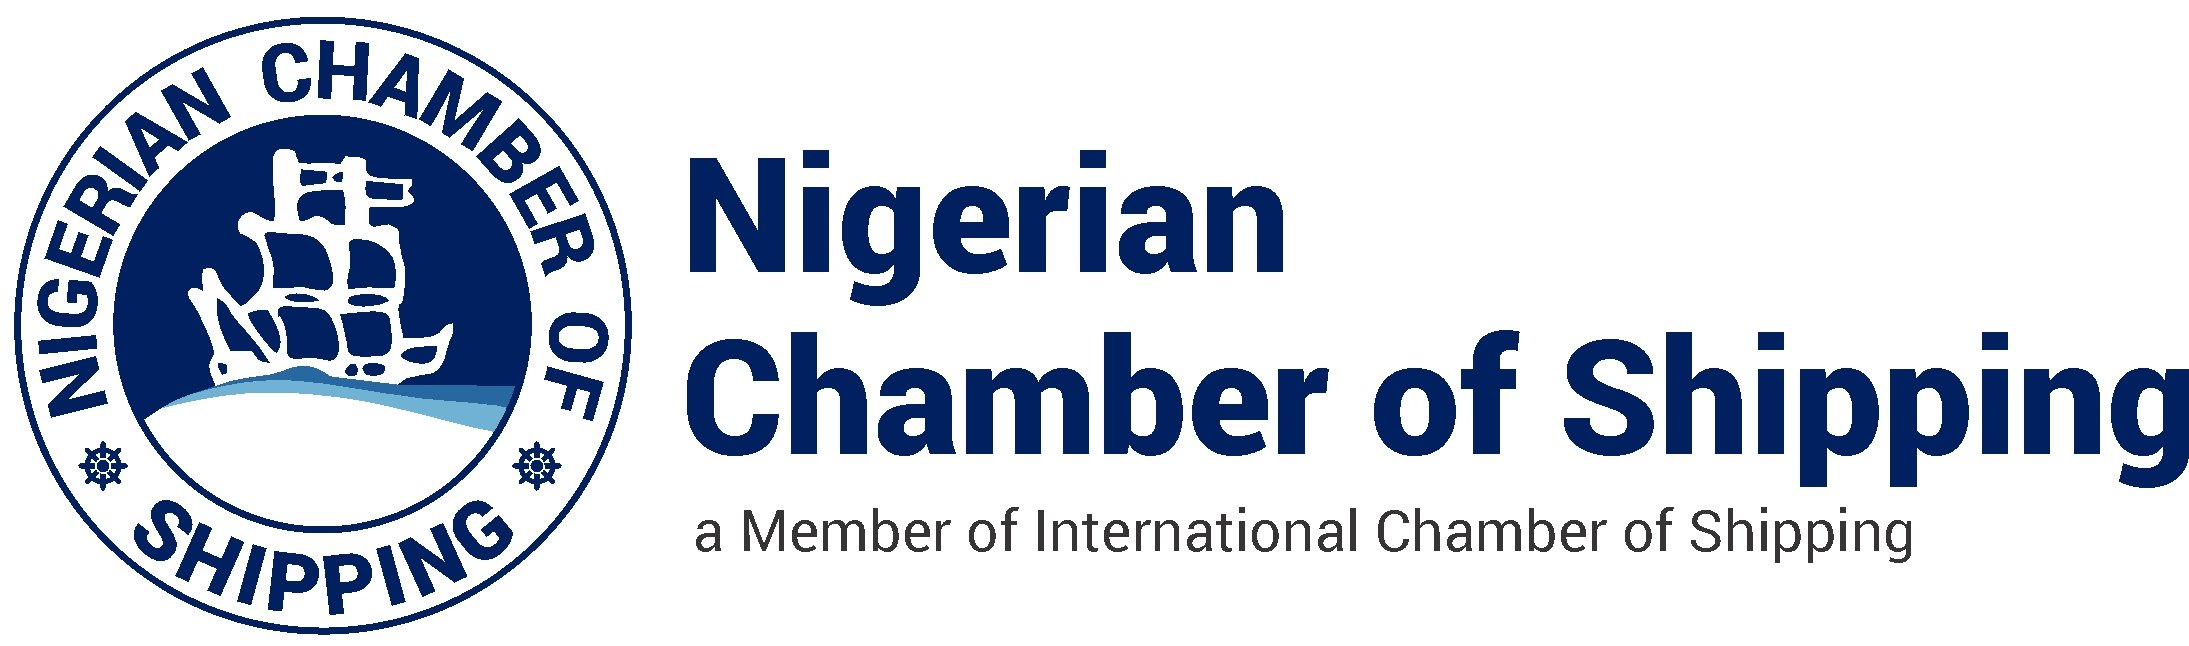 NIGERIA | International Chamber of Shipping